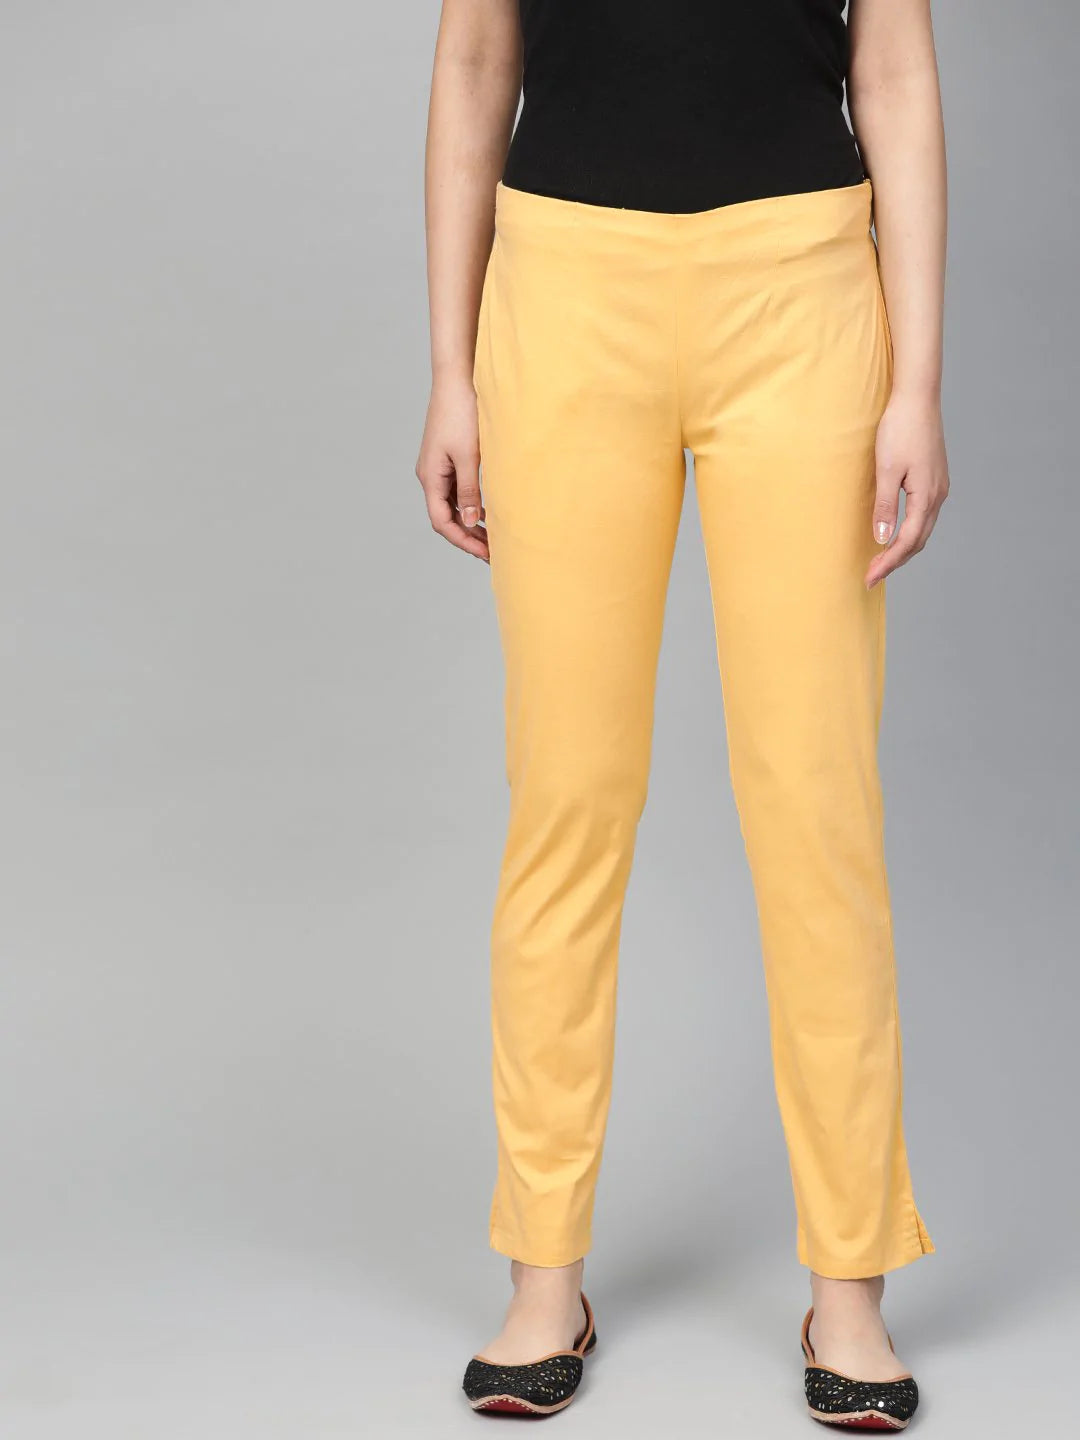 Jompers Women Beige Smart Slim Fit Solid Regular Trousers ( JOP 2119 Beige )